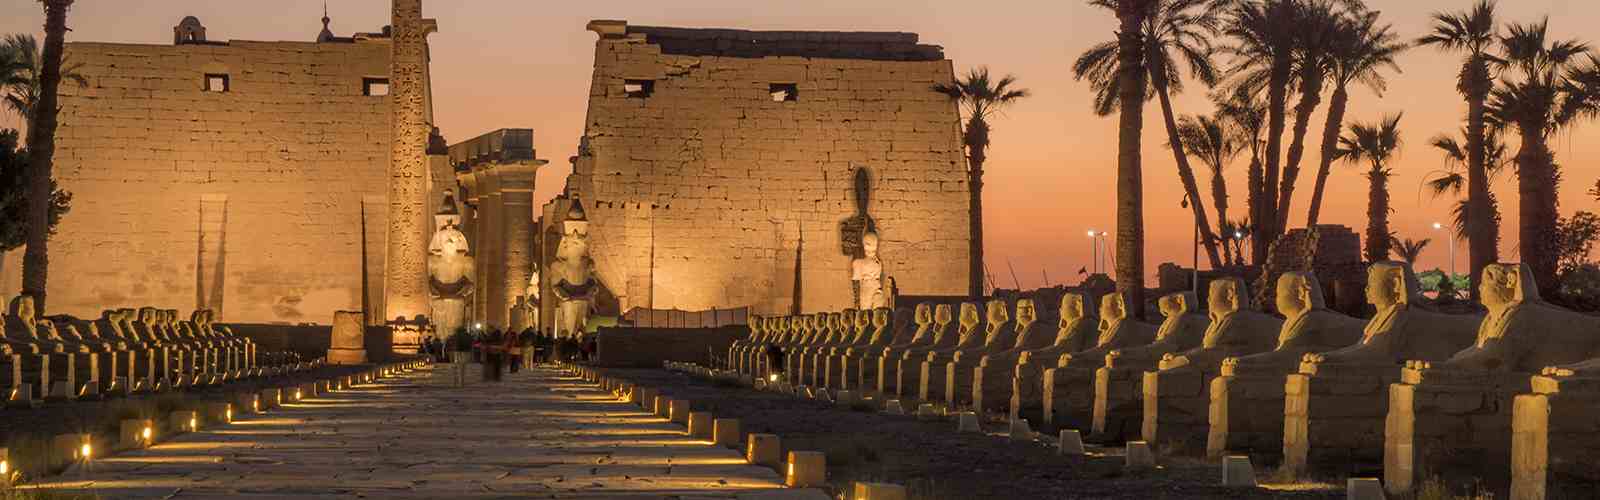 Luxor Temple in Luxor City